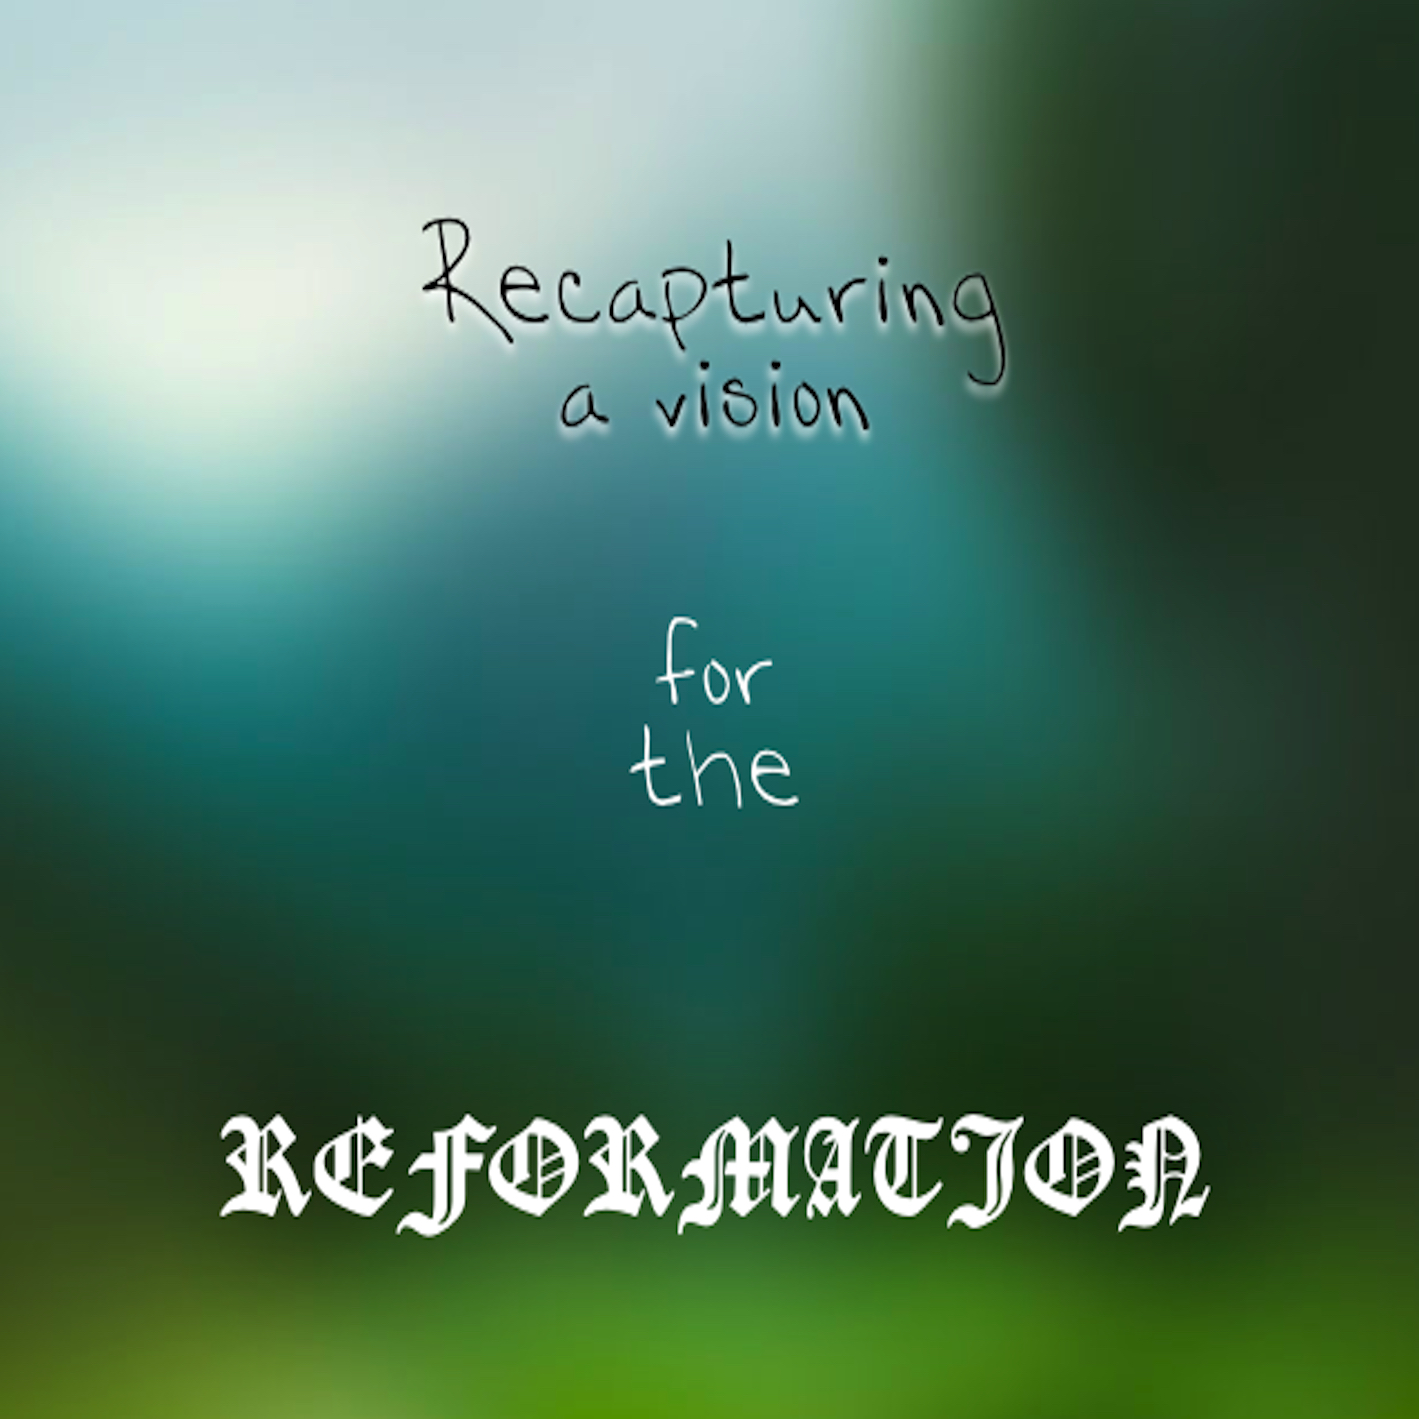 Recapturing-reformation